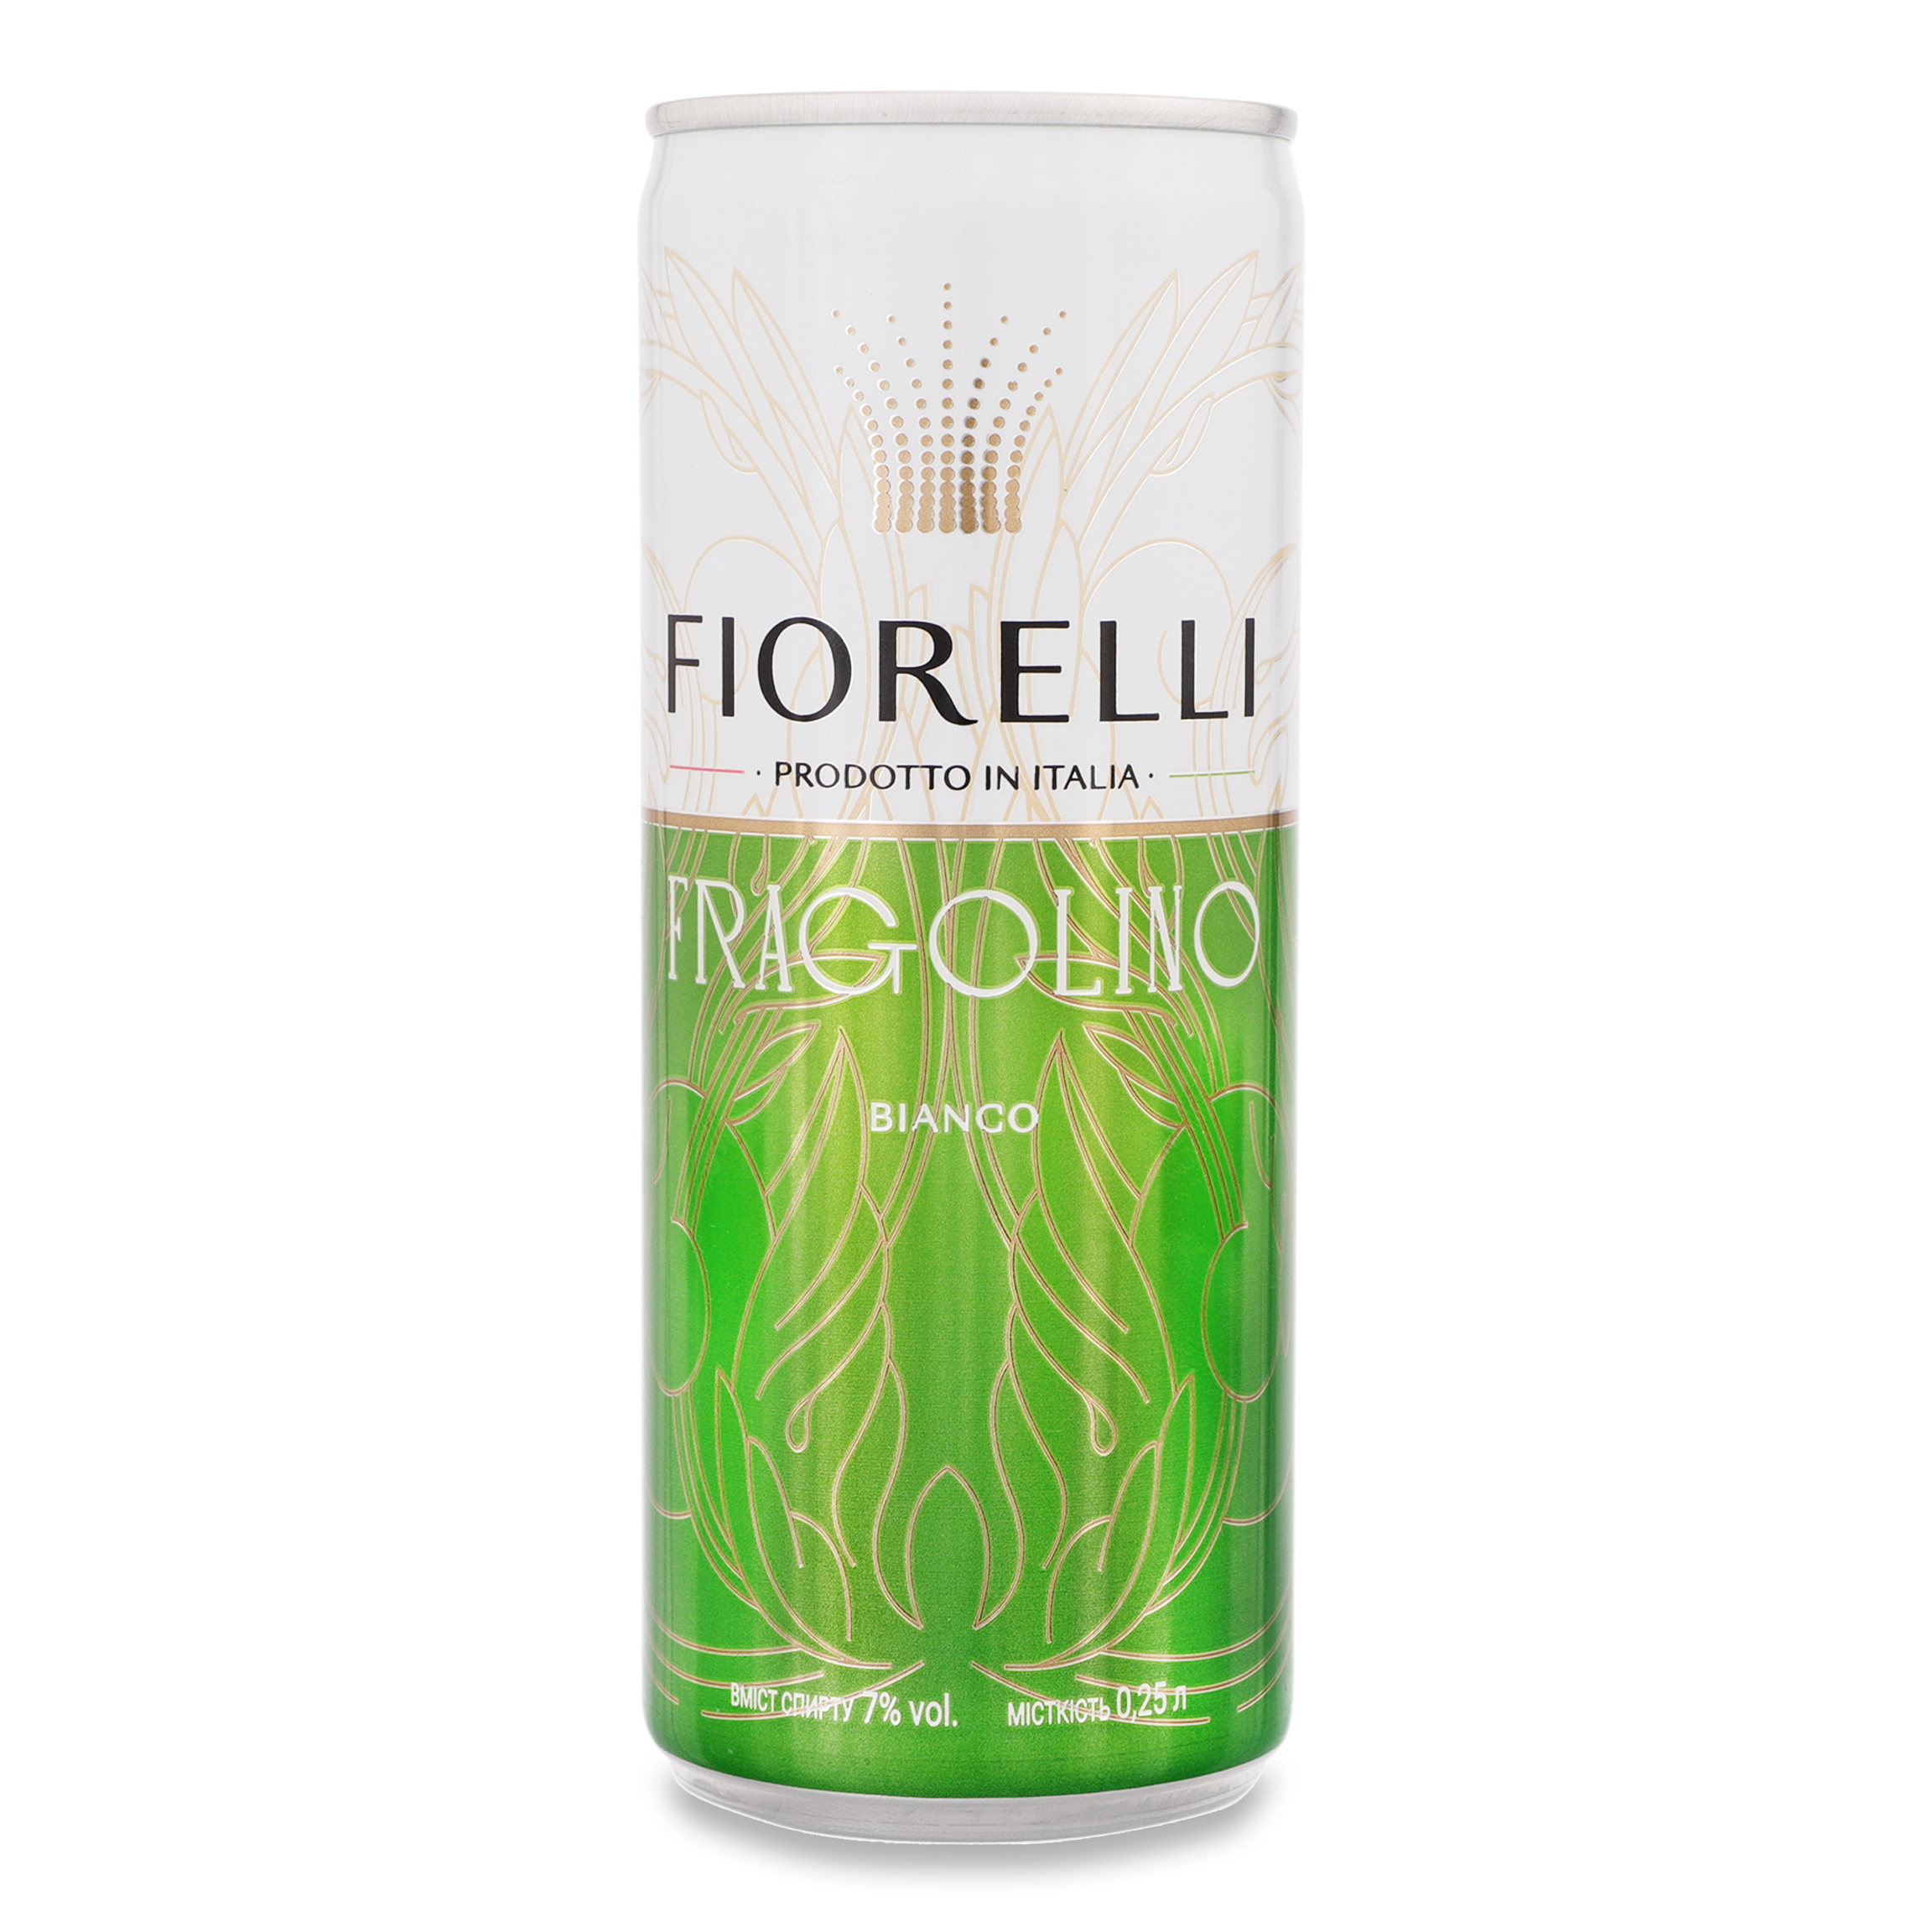 Fiorelli Fragolino Bianco wine-based drink white sweet 7% 0,25l